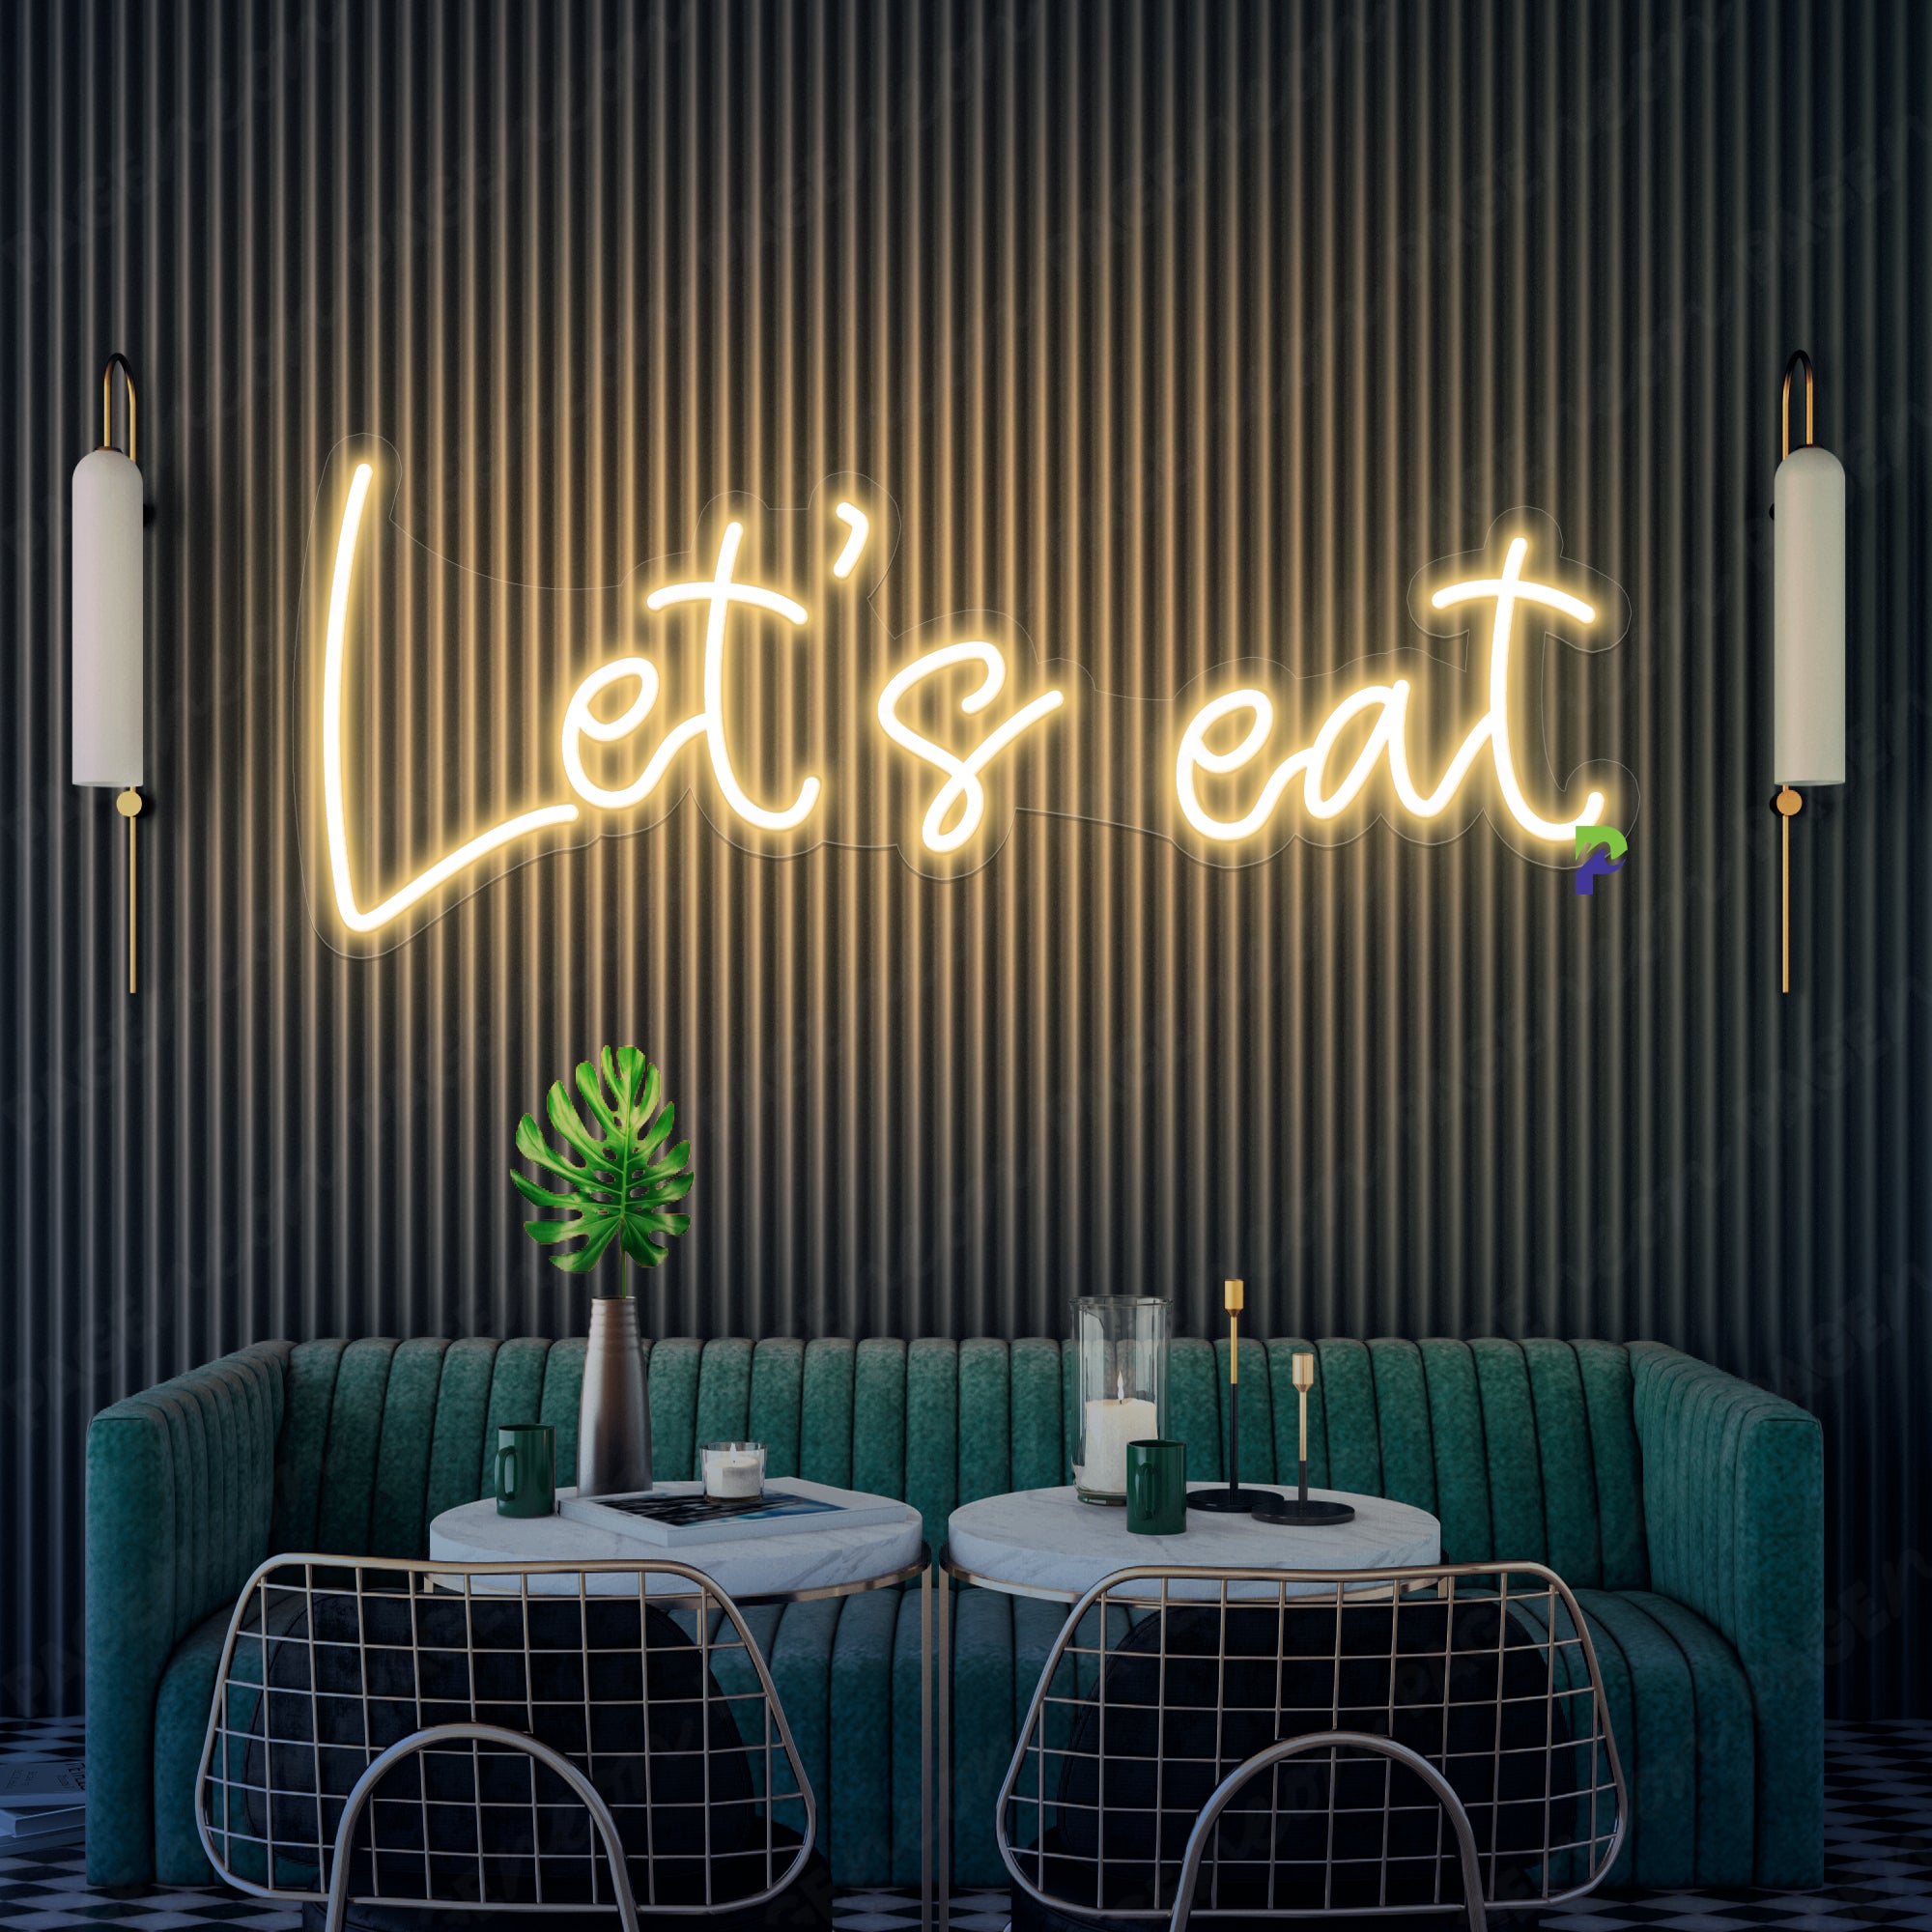 Let's Eat Neon Sign Led Light For Kitchen